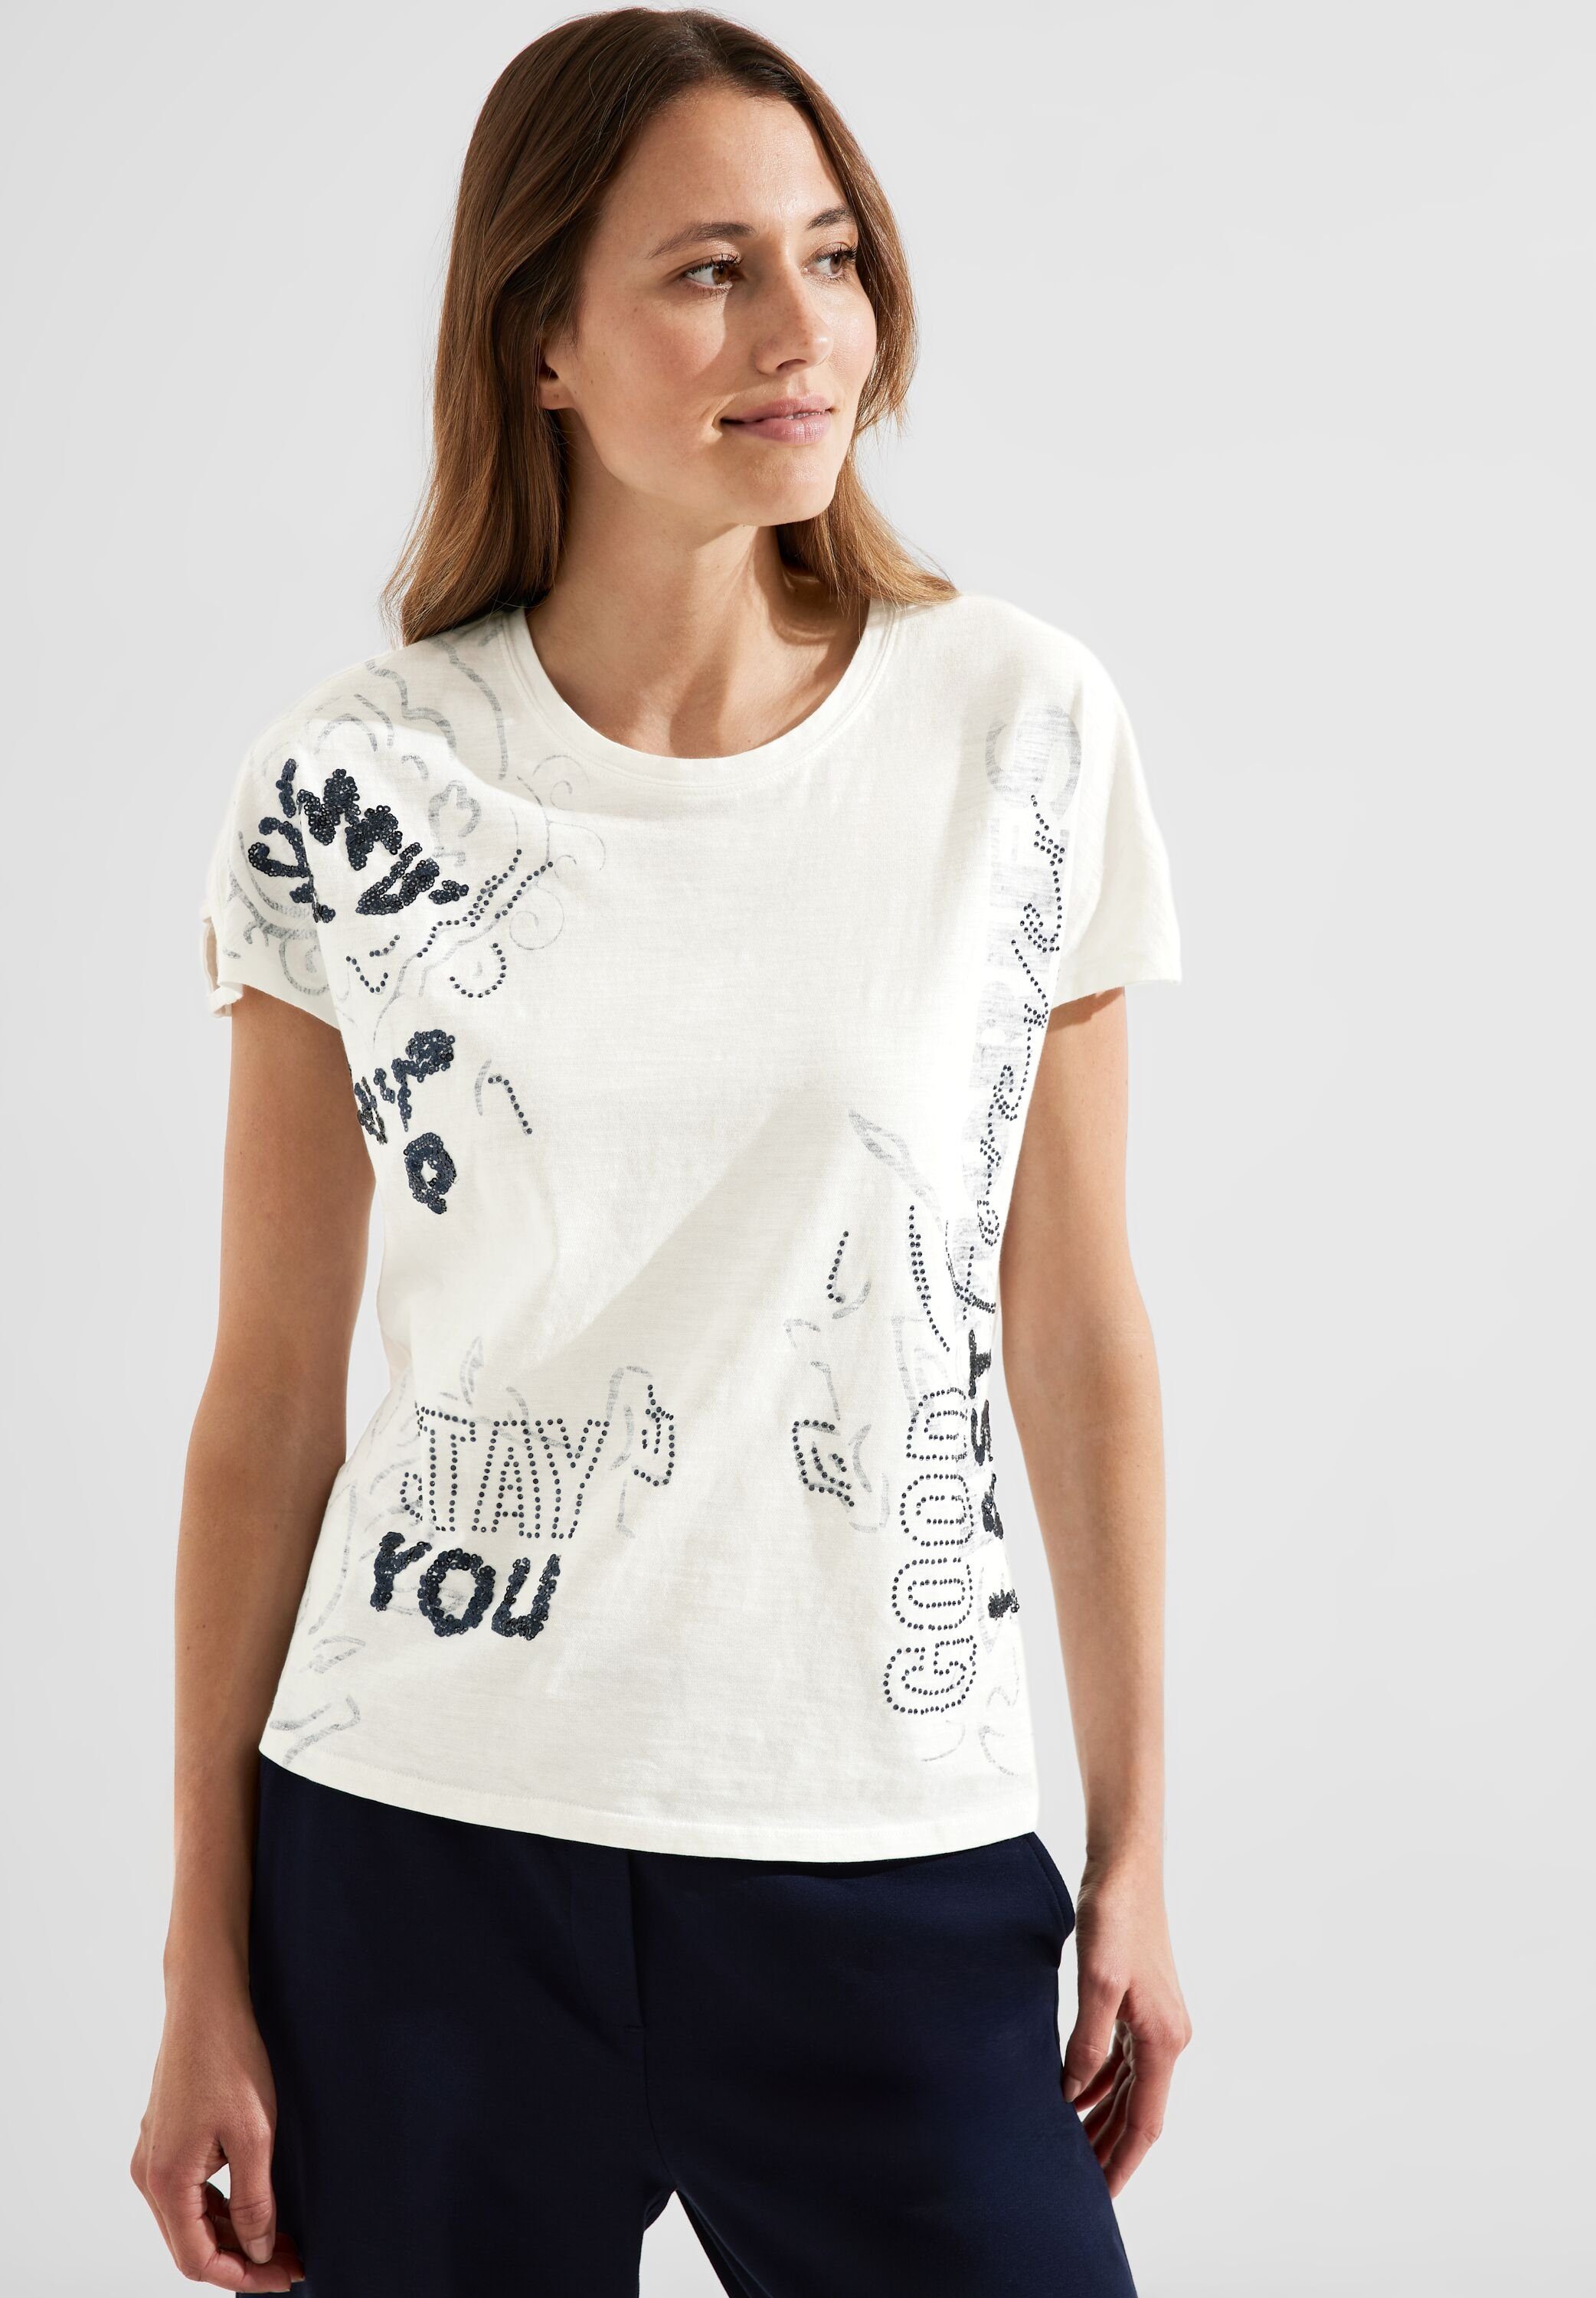 Print-Shirt Baumwolle, Inside-Out Print aus Ornament Cecil reiner